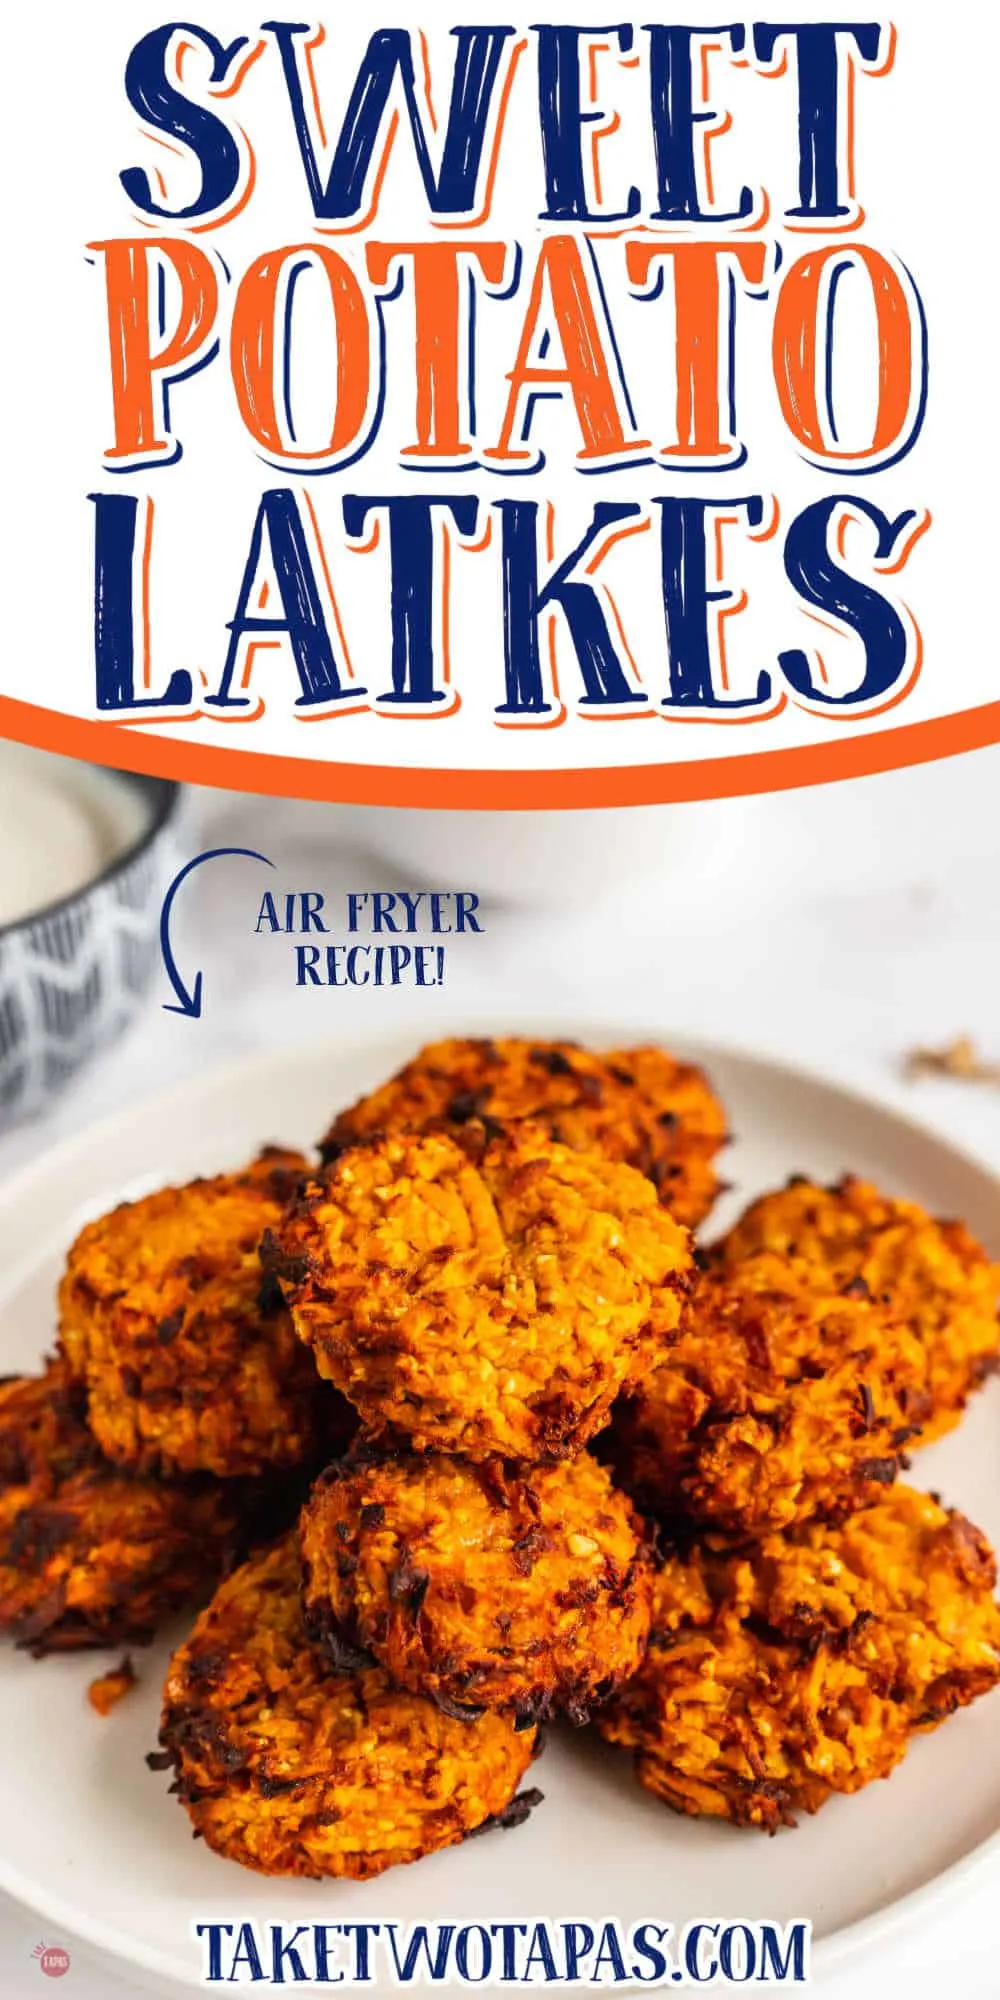 plate of latkes with text "sweet potato latkes"